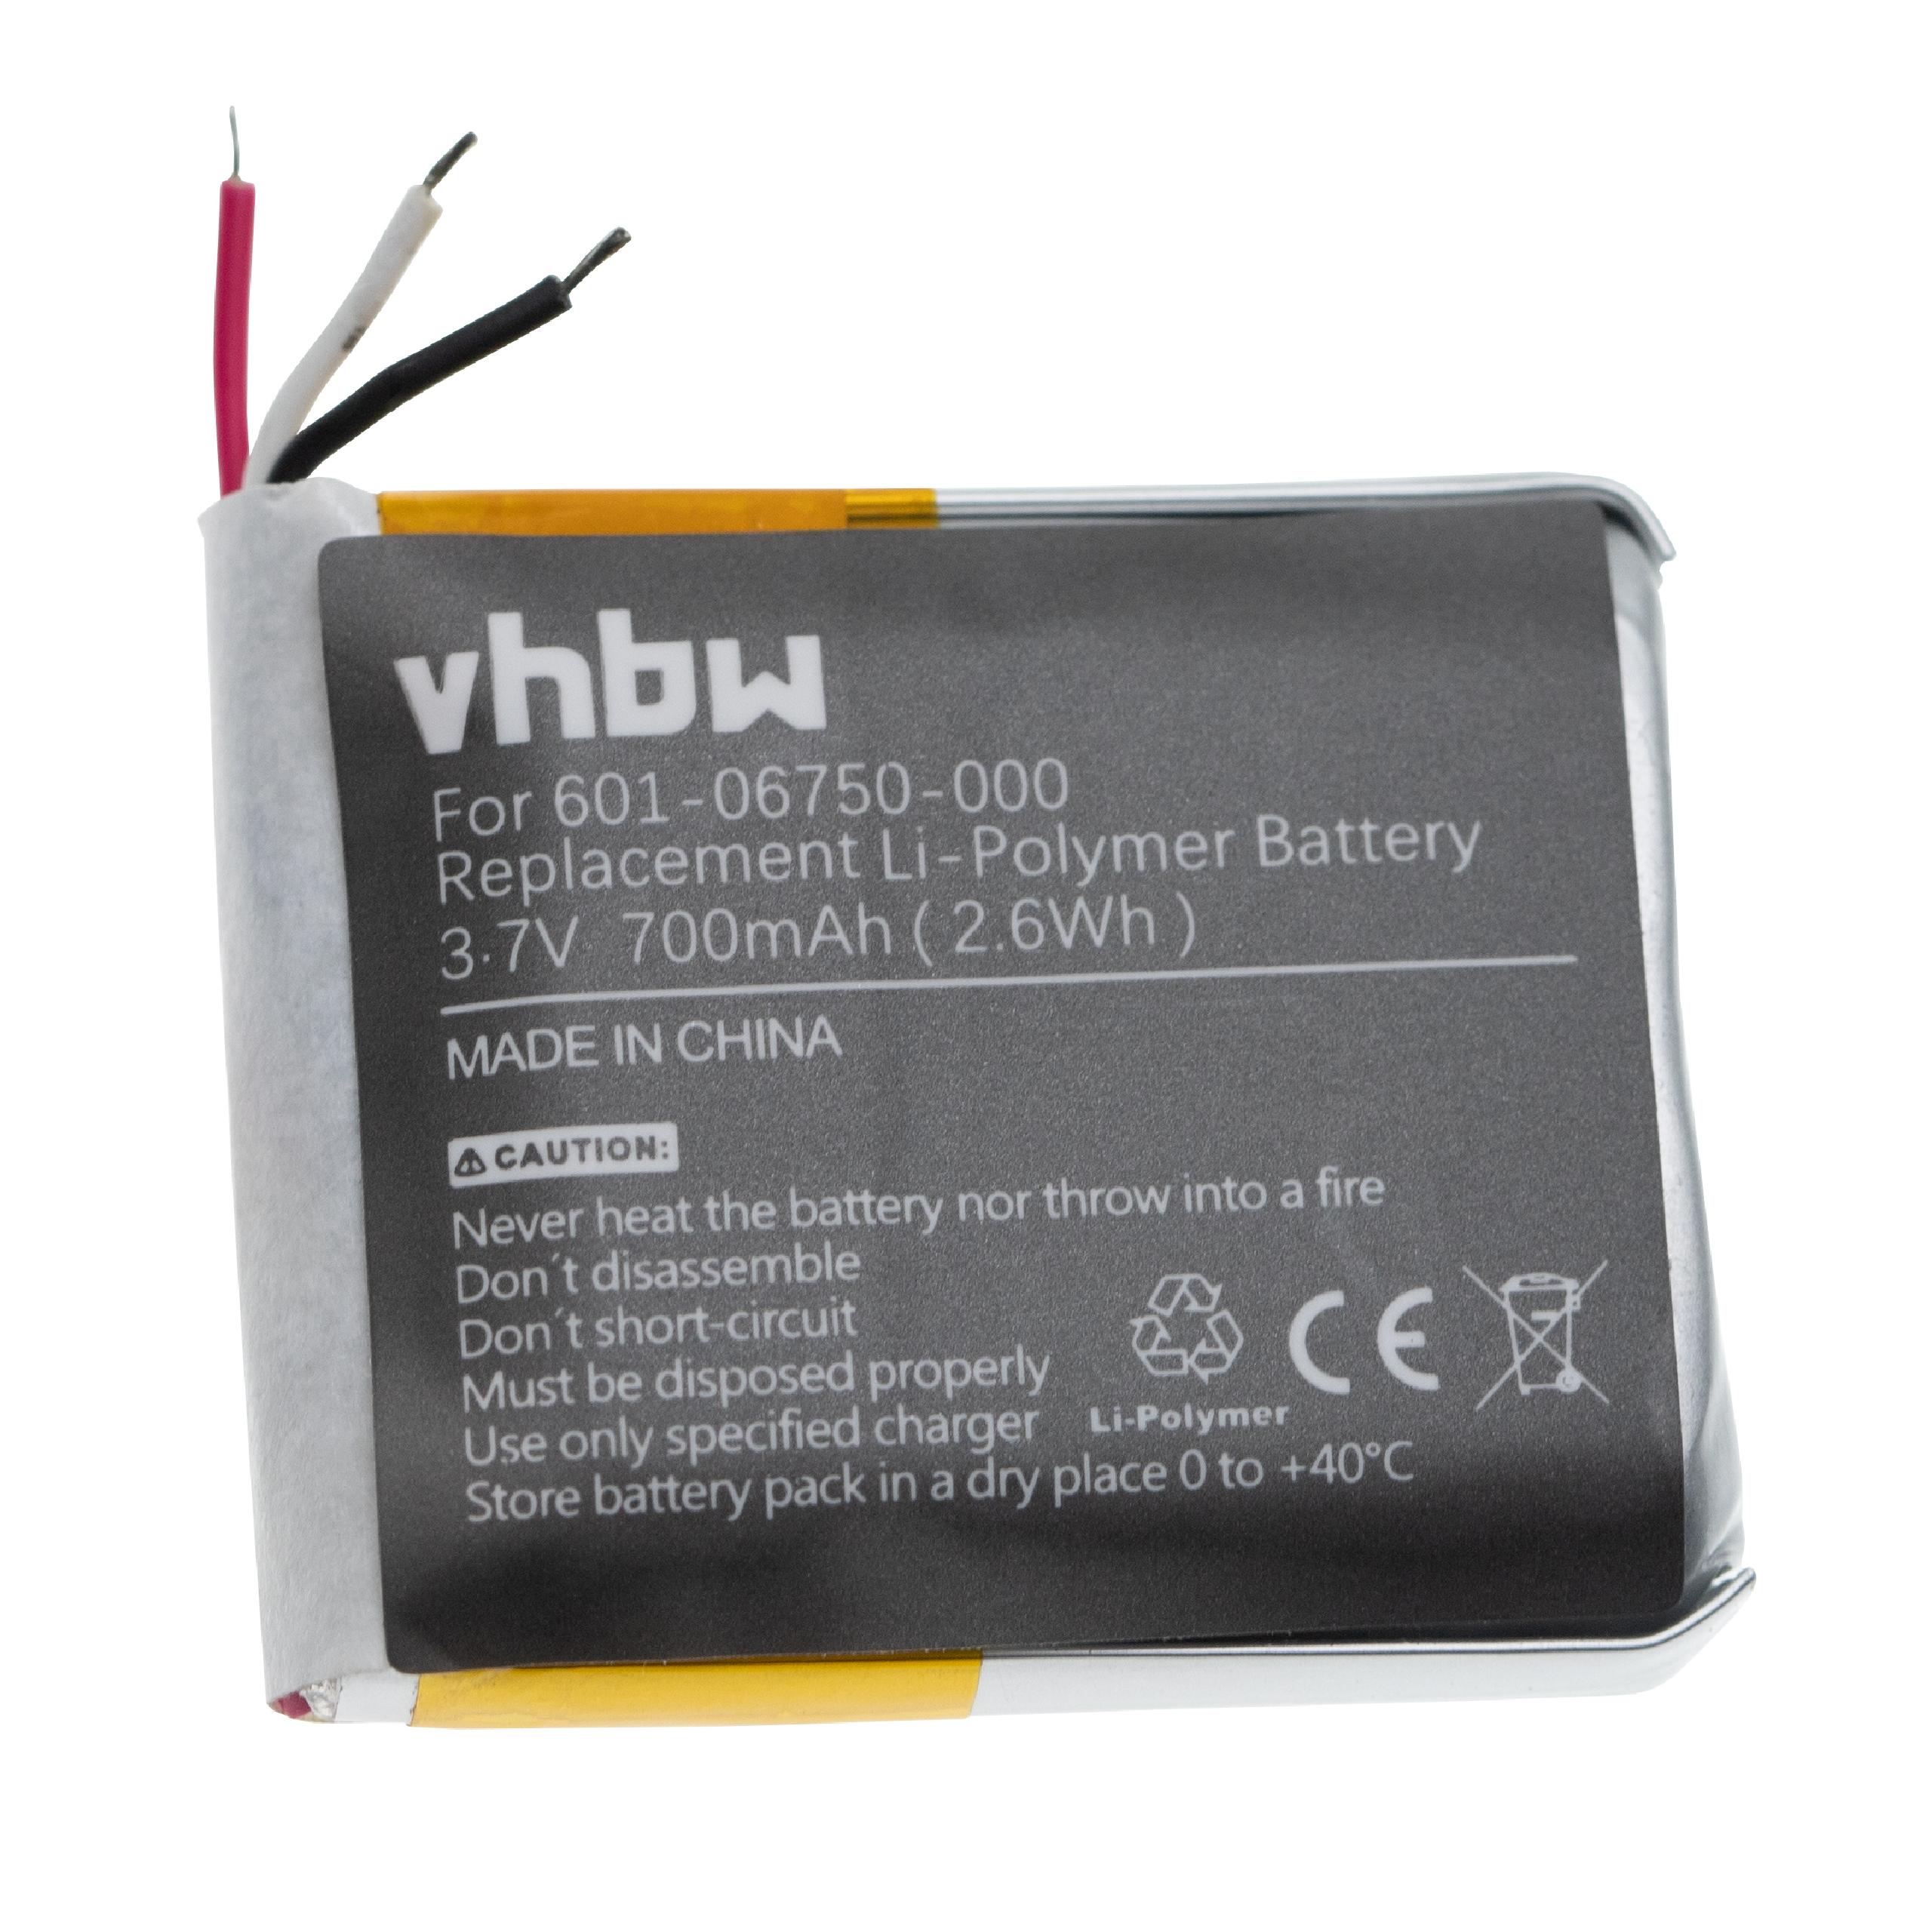 Videocamera Battery Replacement for GoPro 601-06750-000, 601-10257-000, 601-06750-101 - 700mAh 3.7V Li-polymer